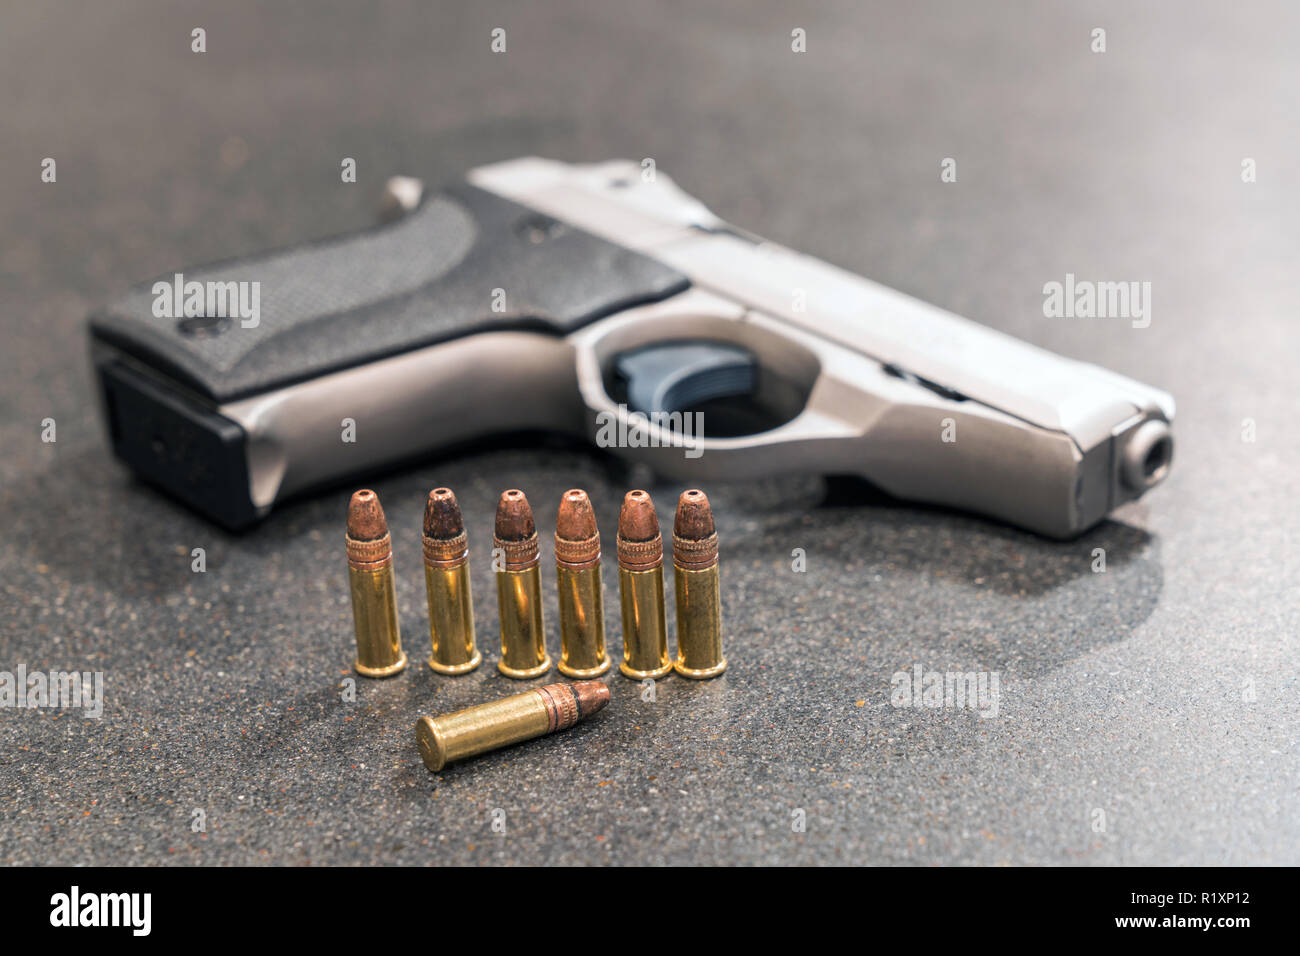 Bullets and Handgun on Black Table Stock Photo